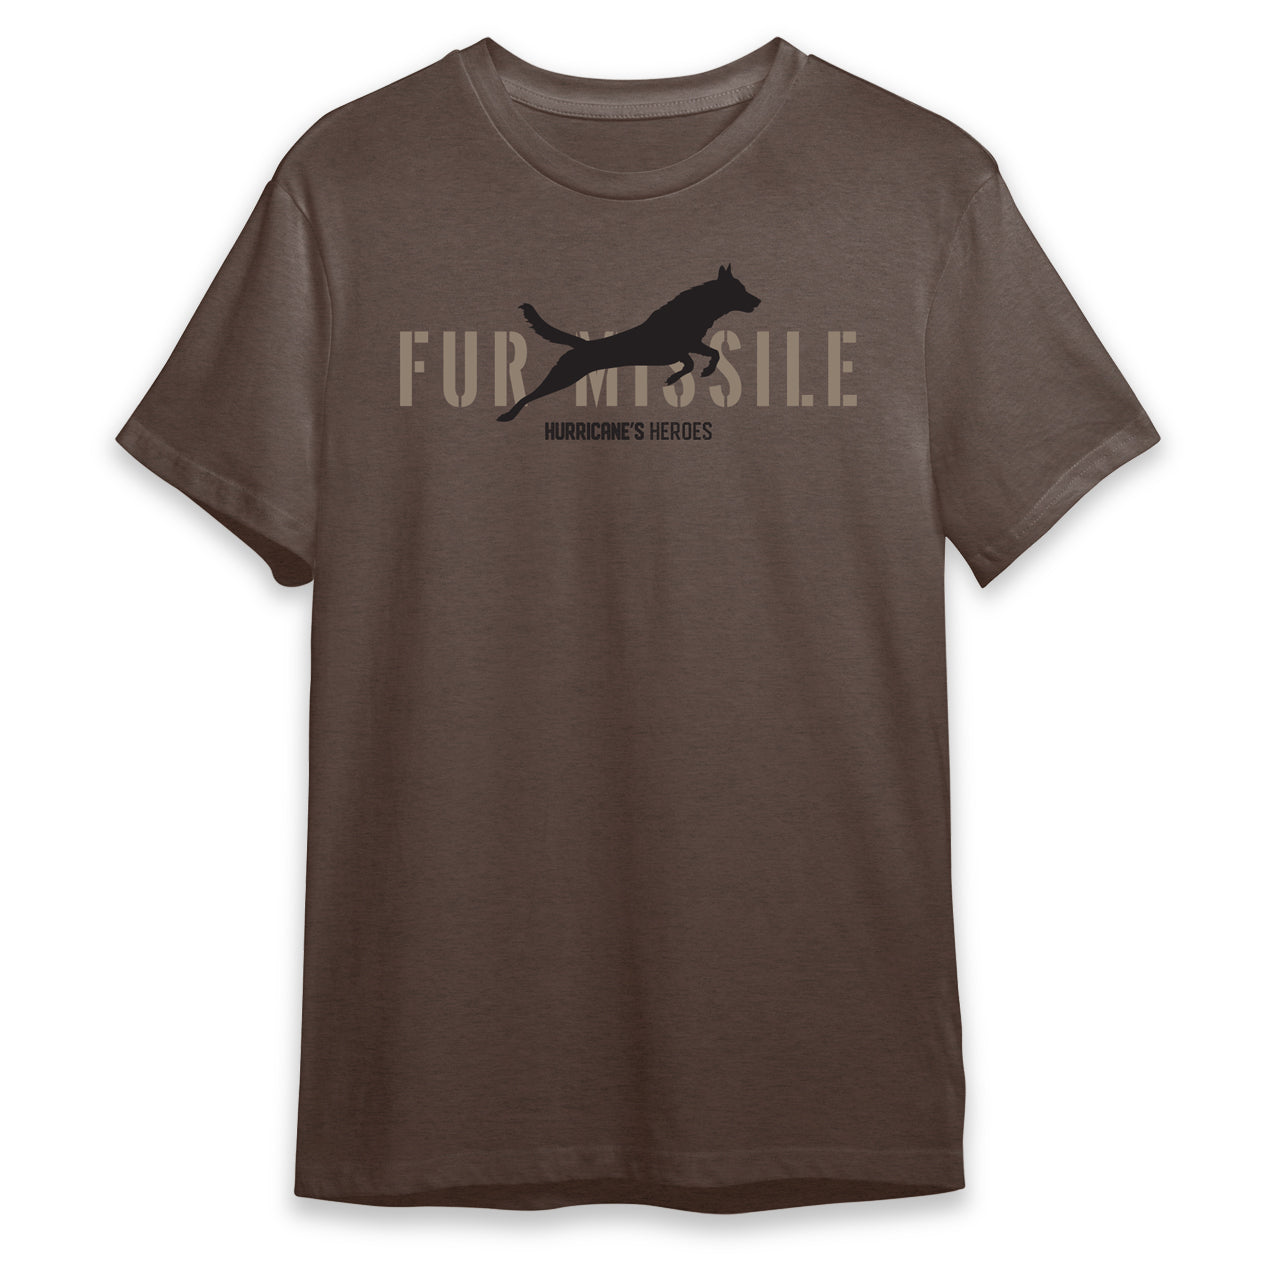 Fur Missile Shirt